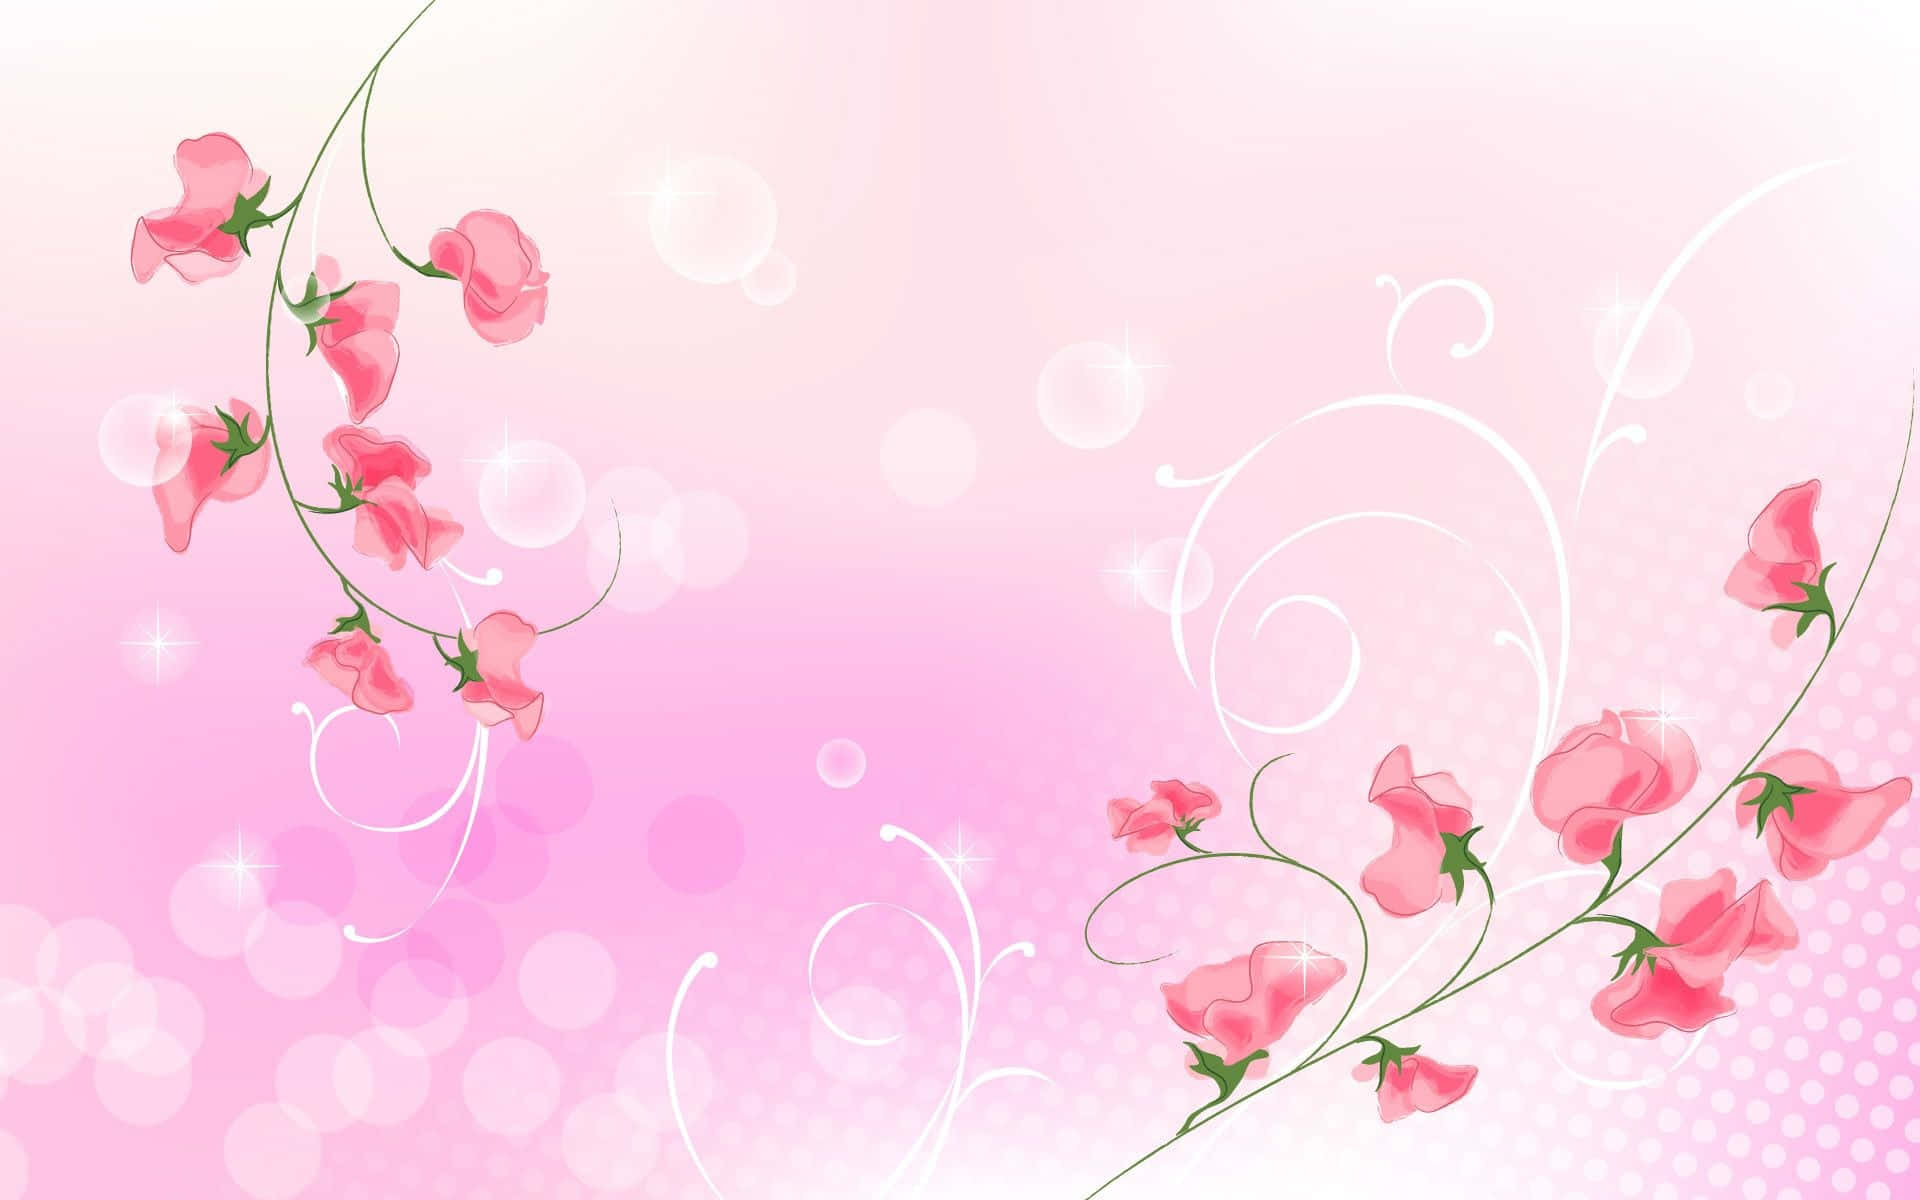 A Lovely, Soft Pink Background